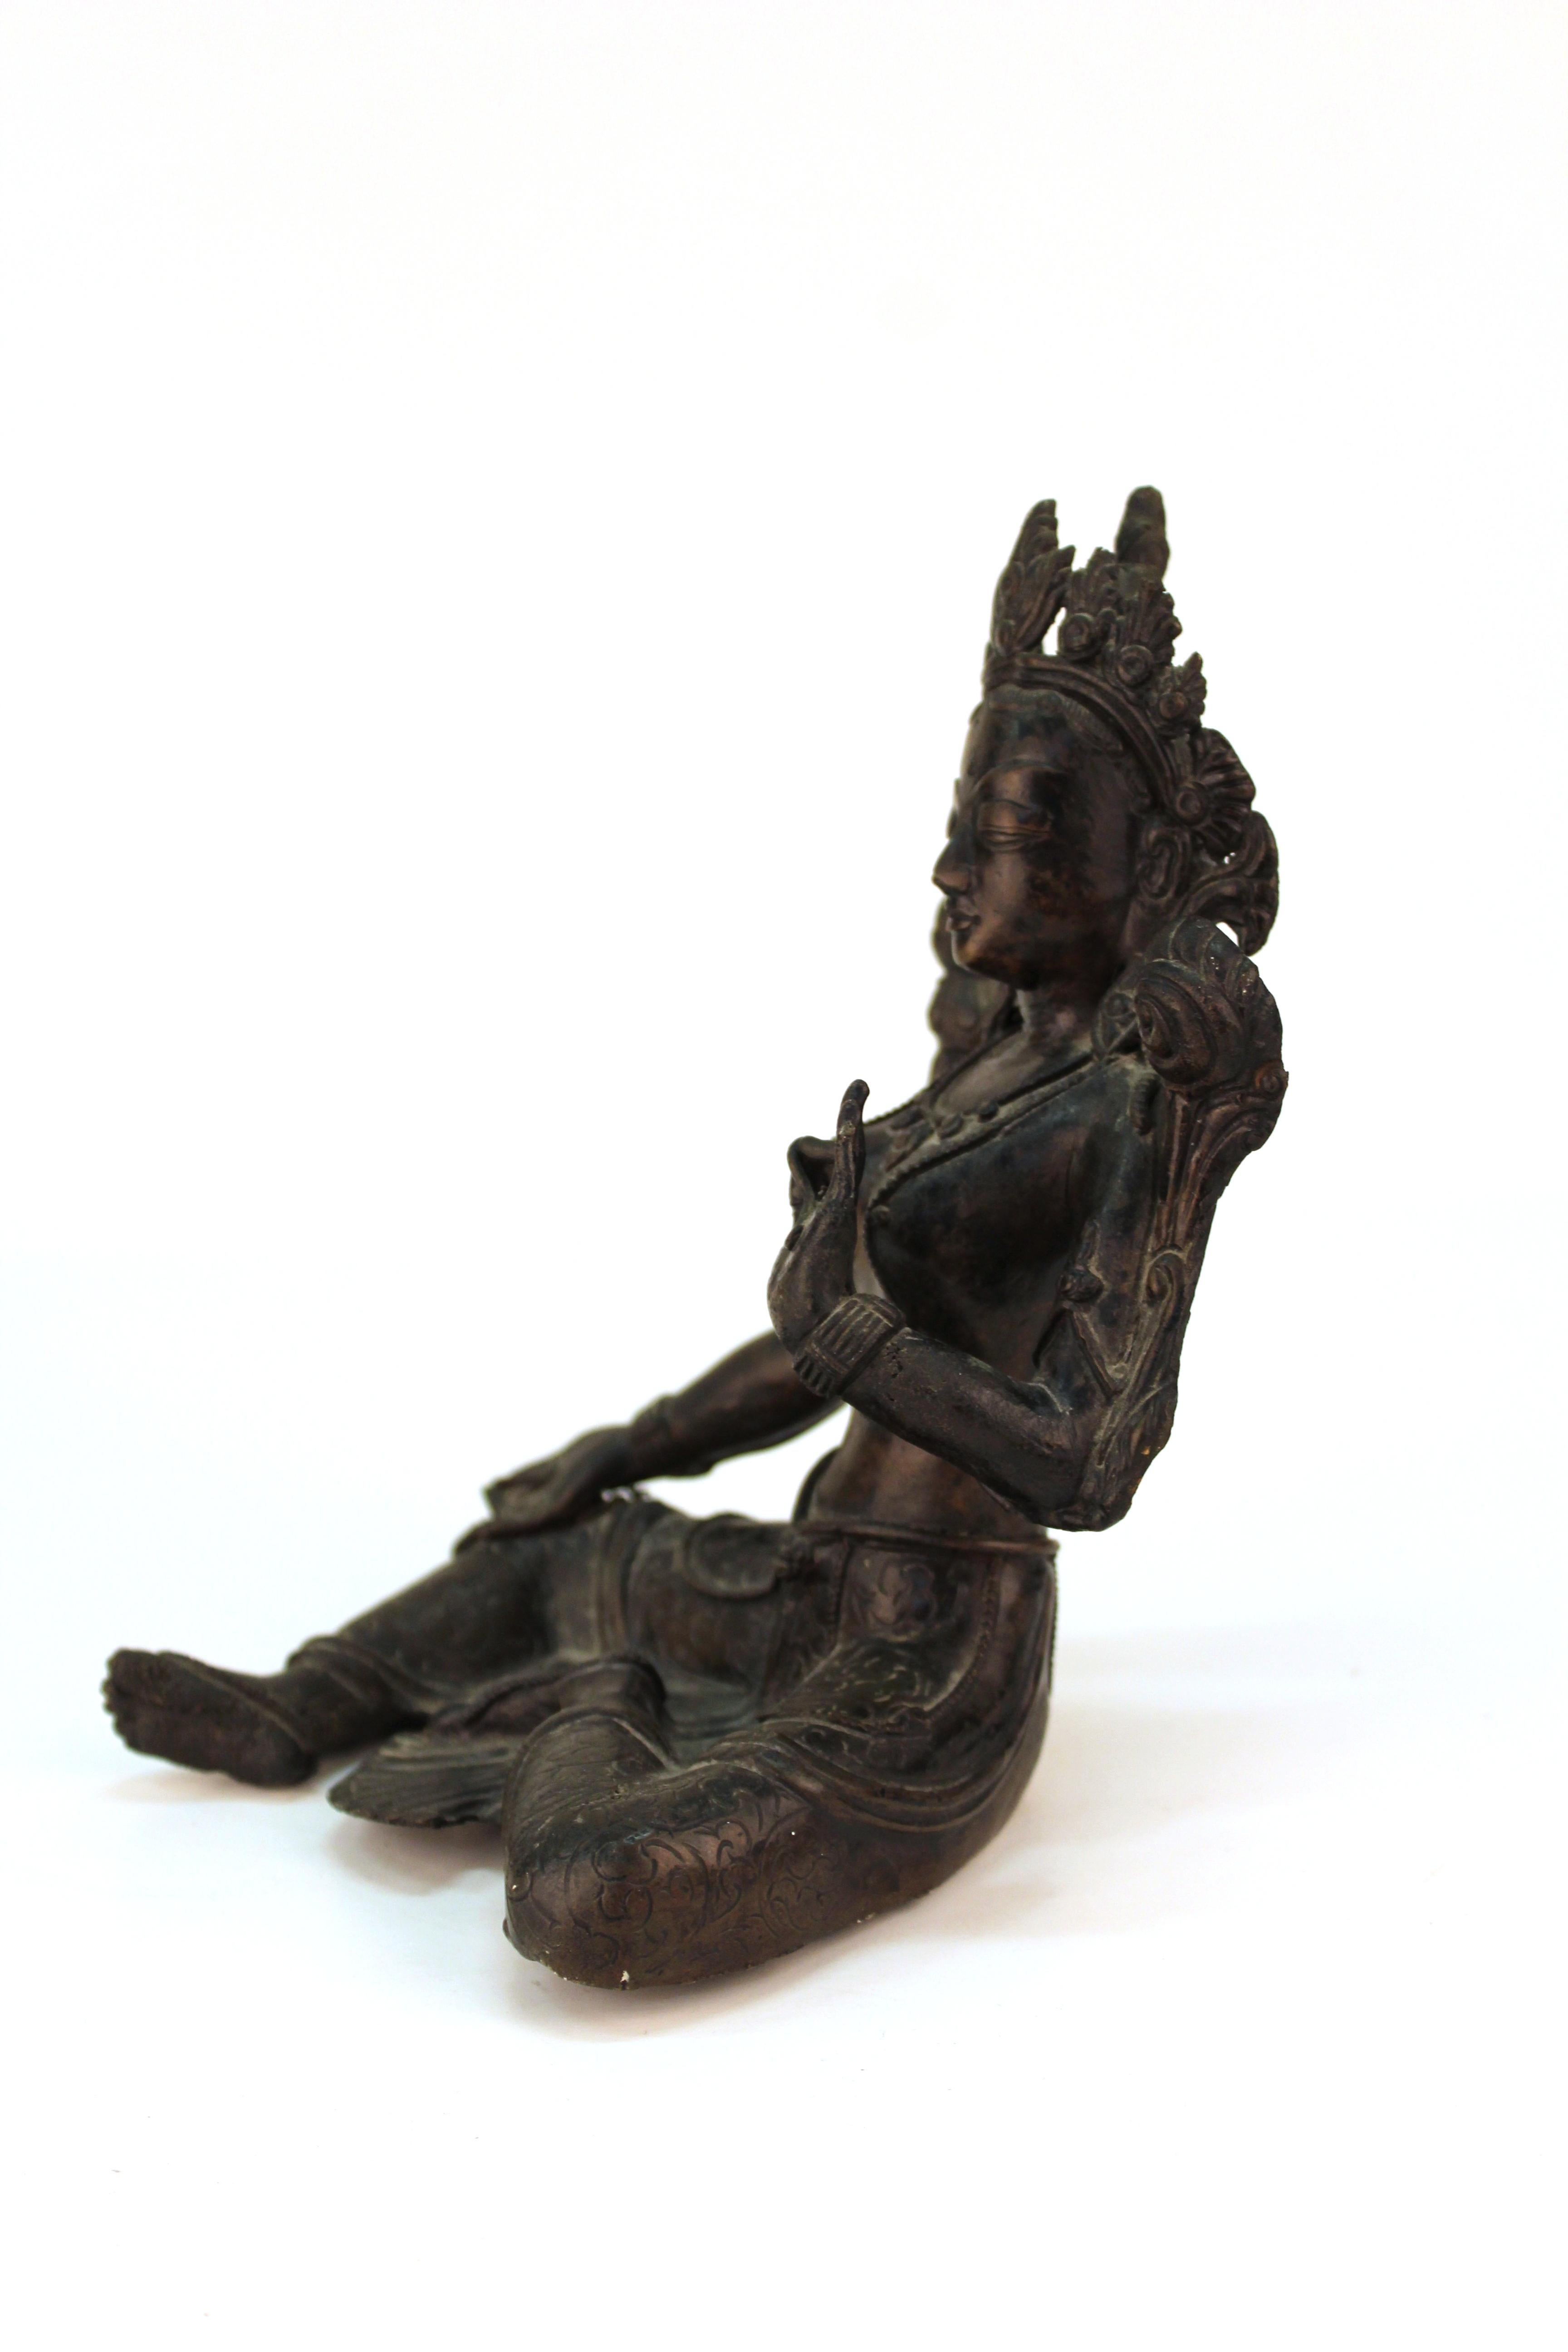 Tibetan Bronzed Metal Buddhist Sculpture of the Seated Bodhisattva Tara 1